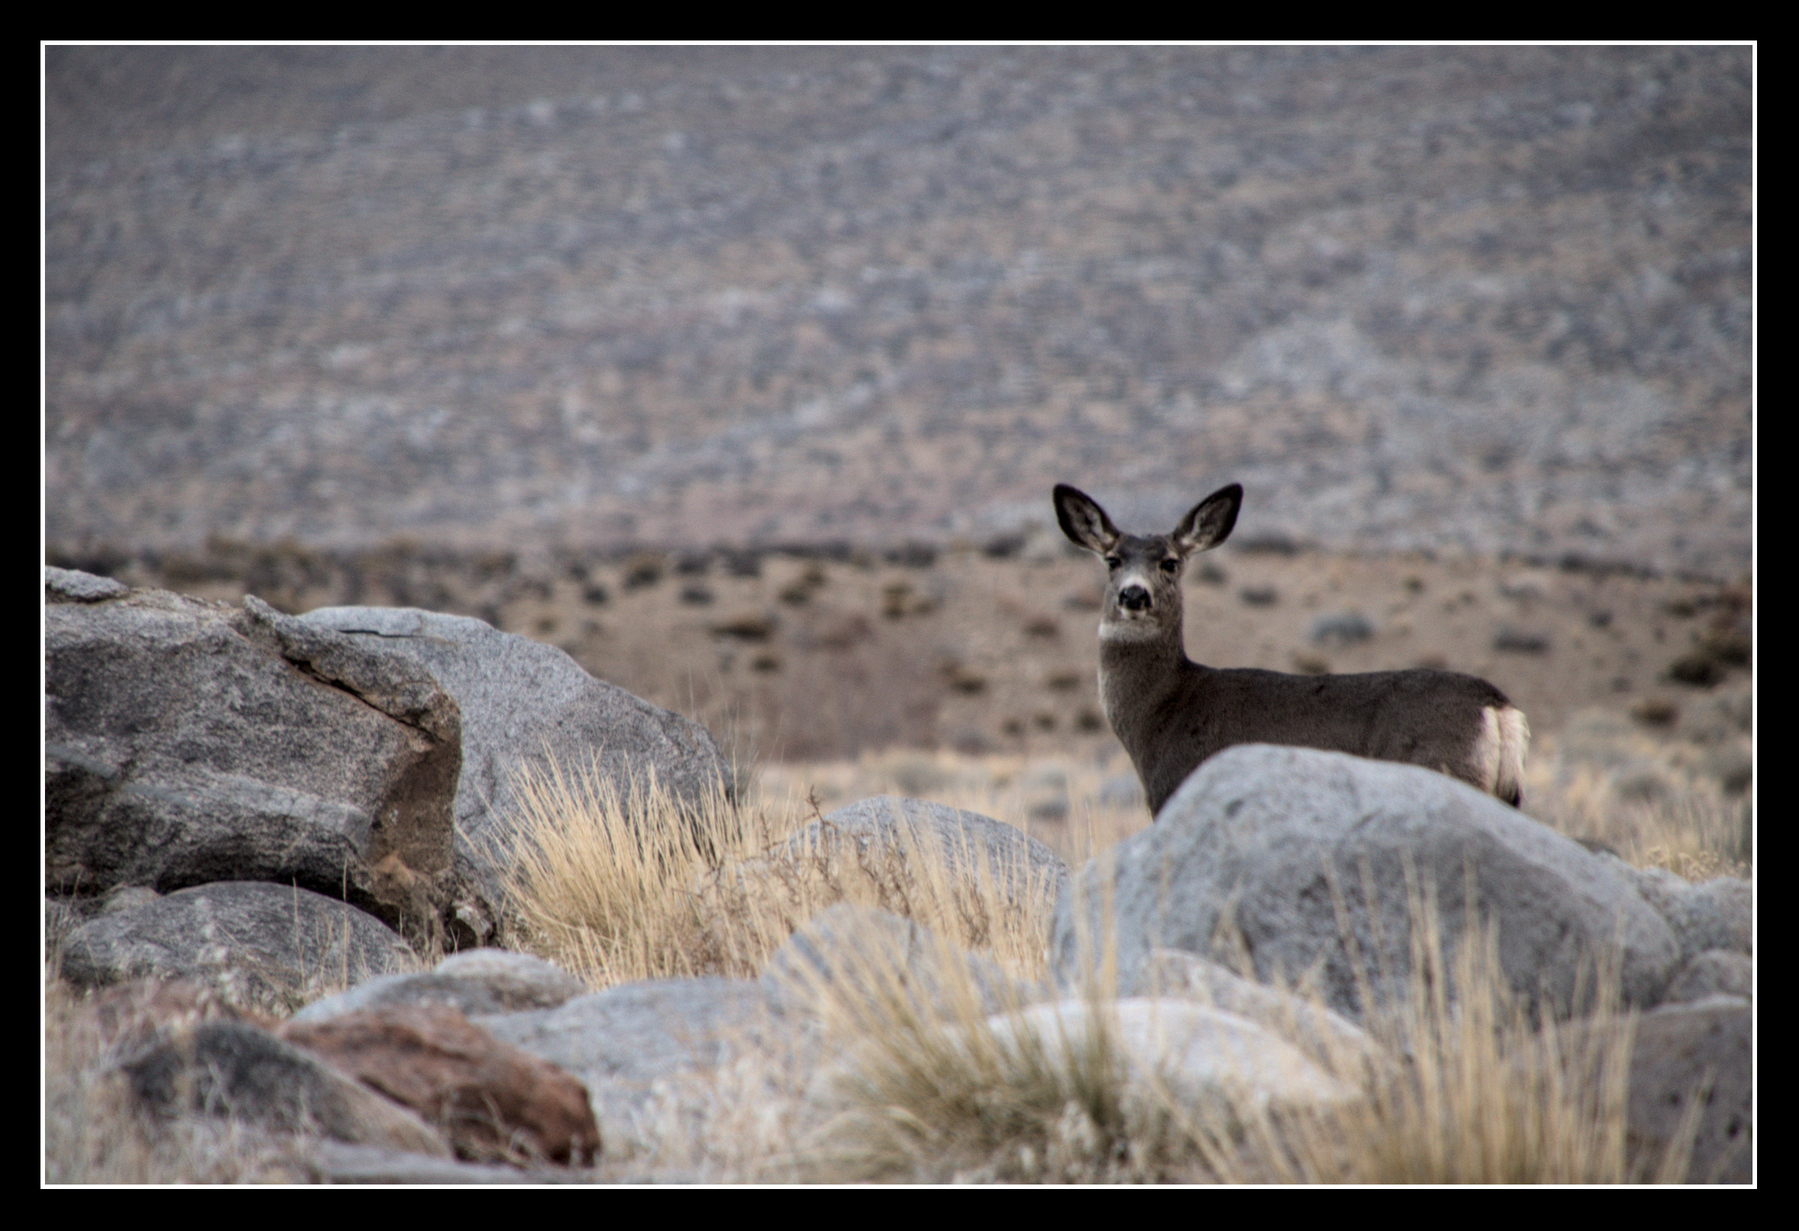 A mule deer stands among boulders.